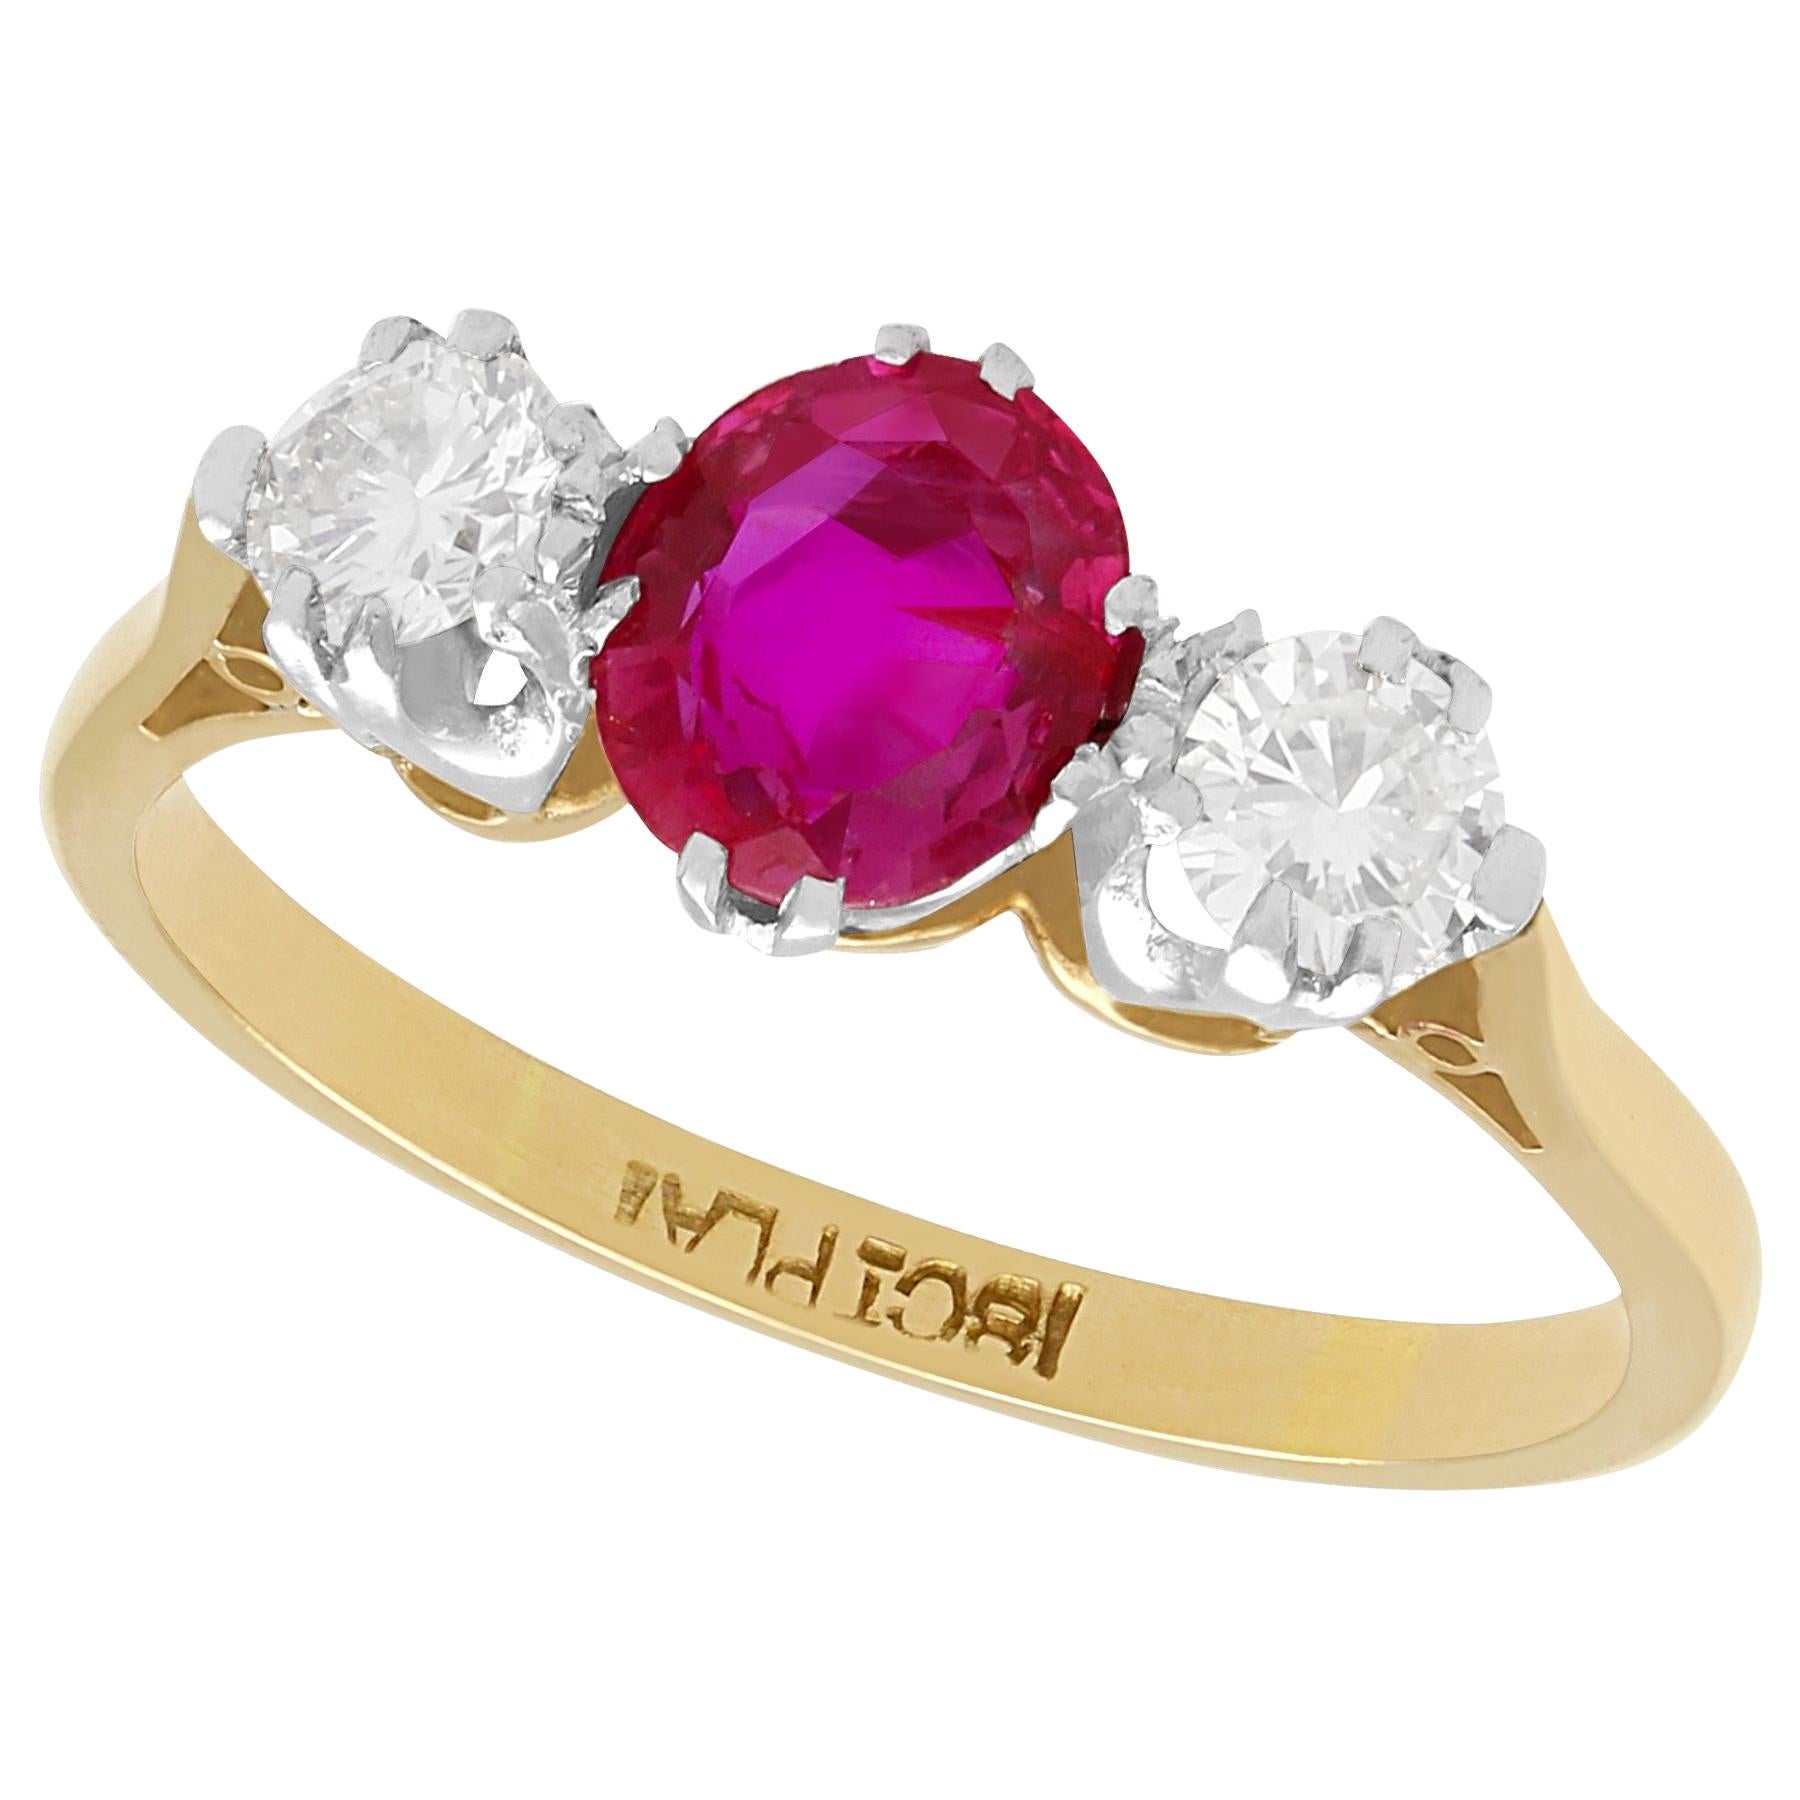 Vintage 1960s Ruby Diamond and Yellow Gold Three-Stone Ring (Bague à trois pierres en or jaune et rubis)